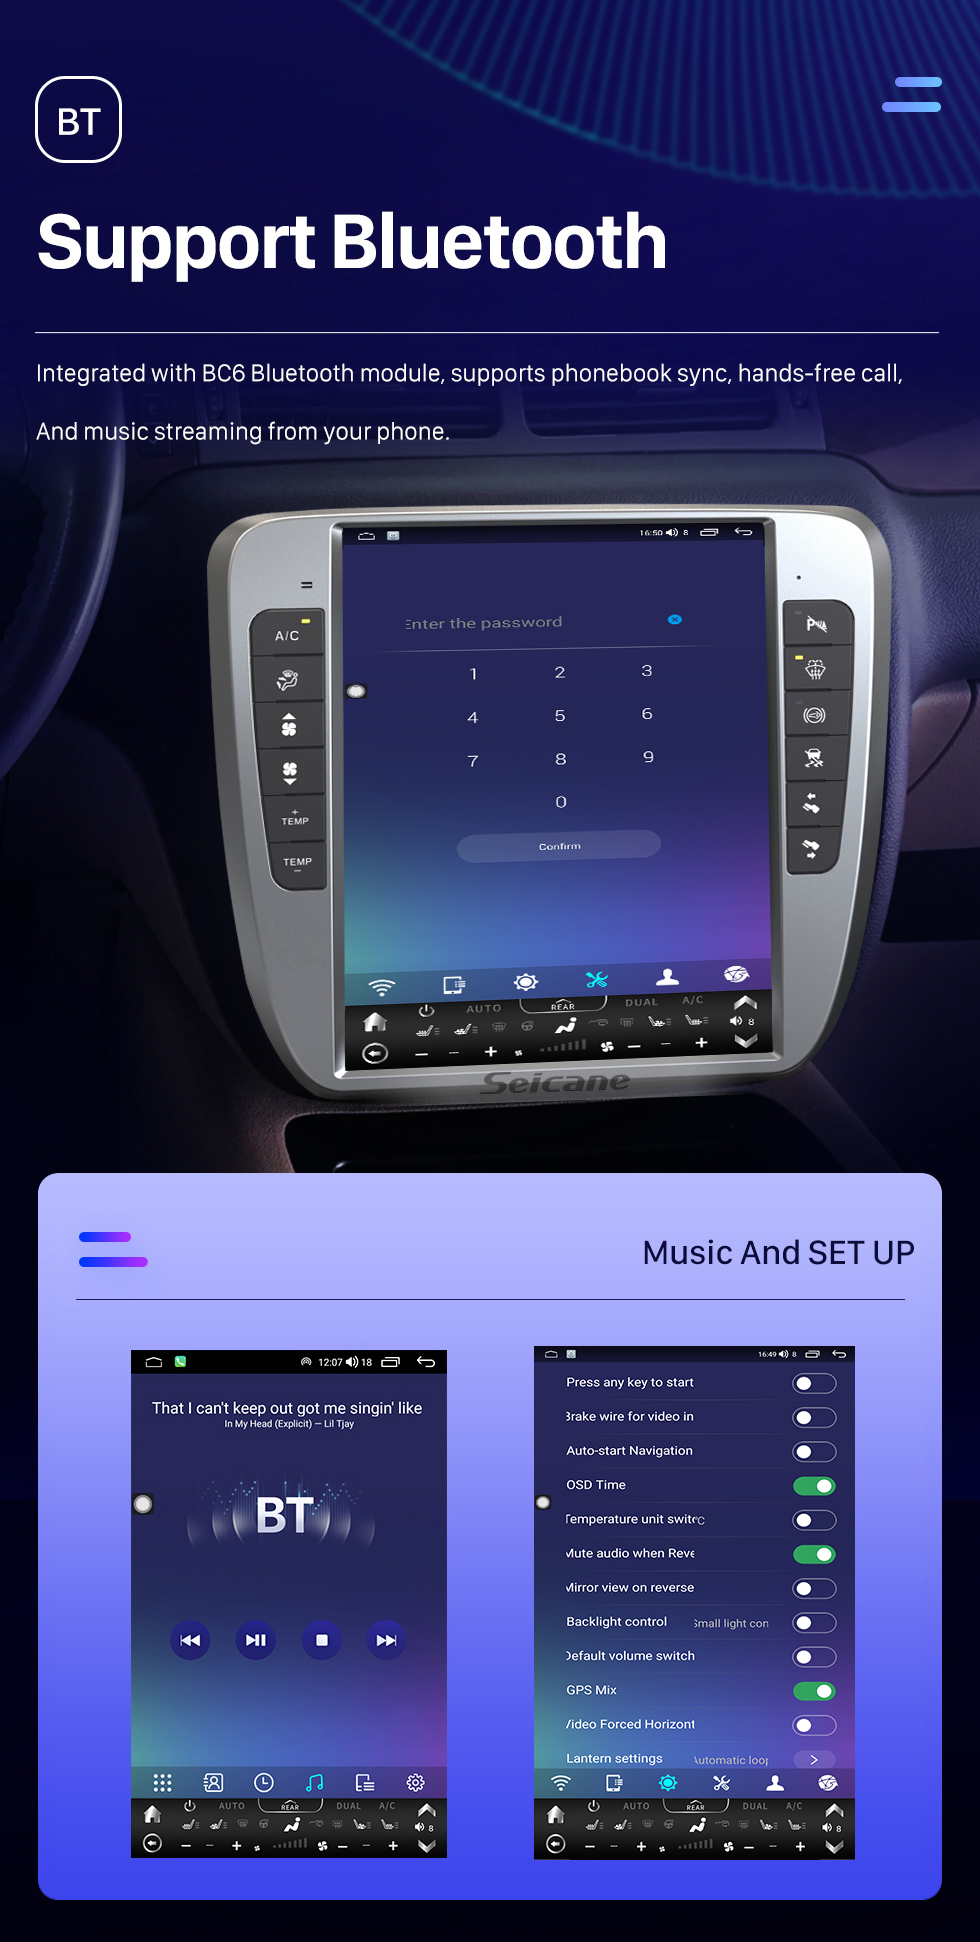 Seicane Carplay 13 pulgadas Android 10.0 HD Pantalla táctil Android Auto Navegación GPS Radio para 2007 2008 2009-2014 Chevy Chevrolet Tahoe Silverado GMC YUkon con Bluetooth